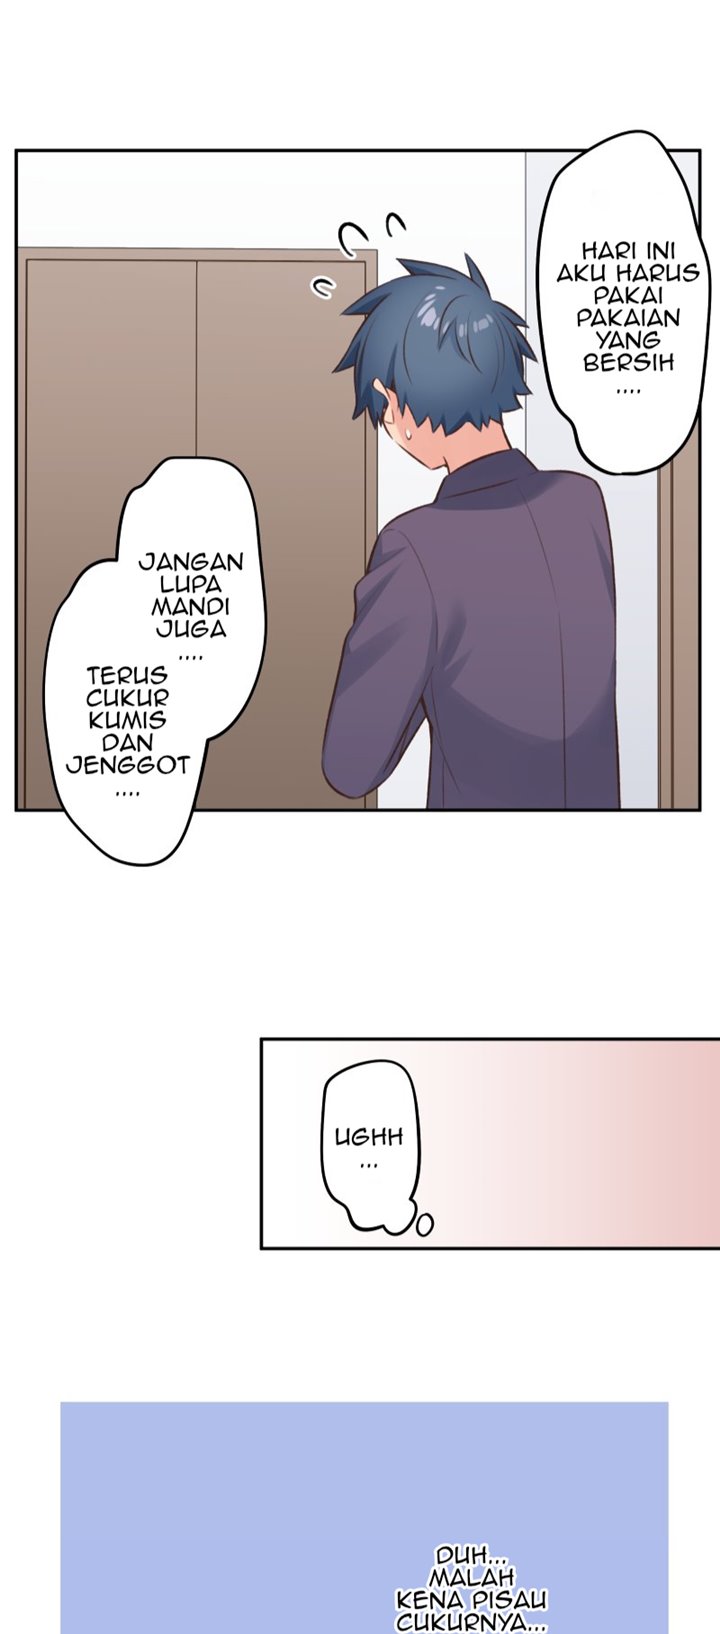 Waka-chan Is Flirty Again Chapter 99